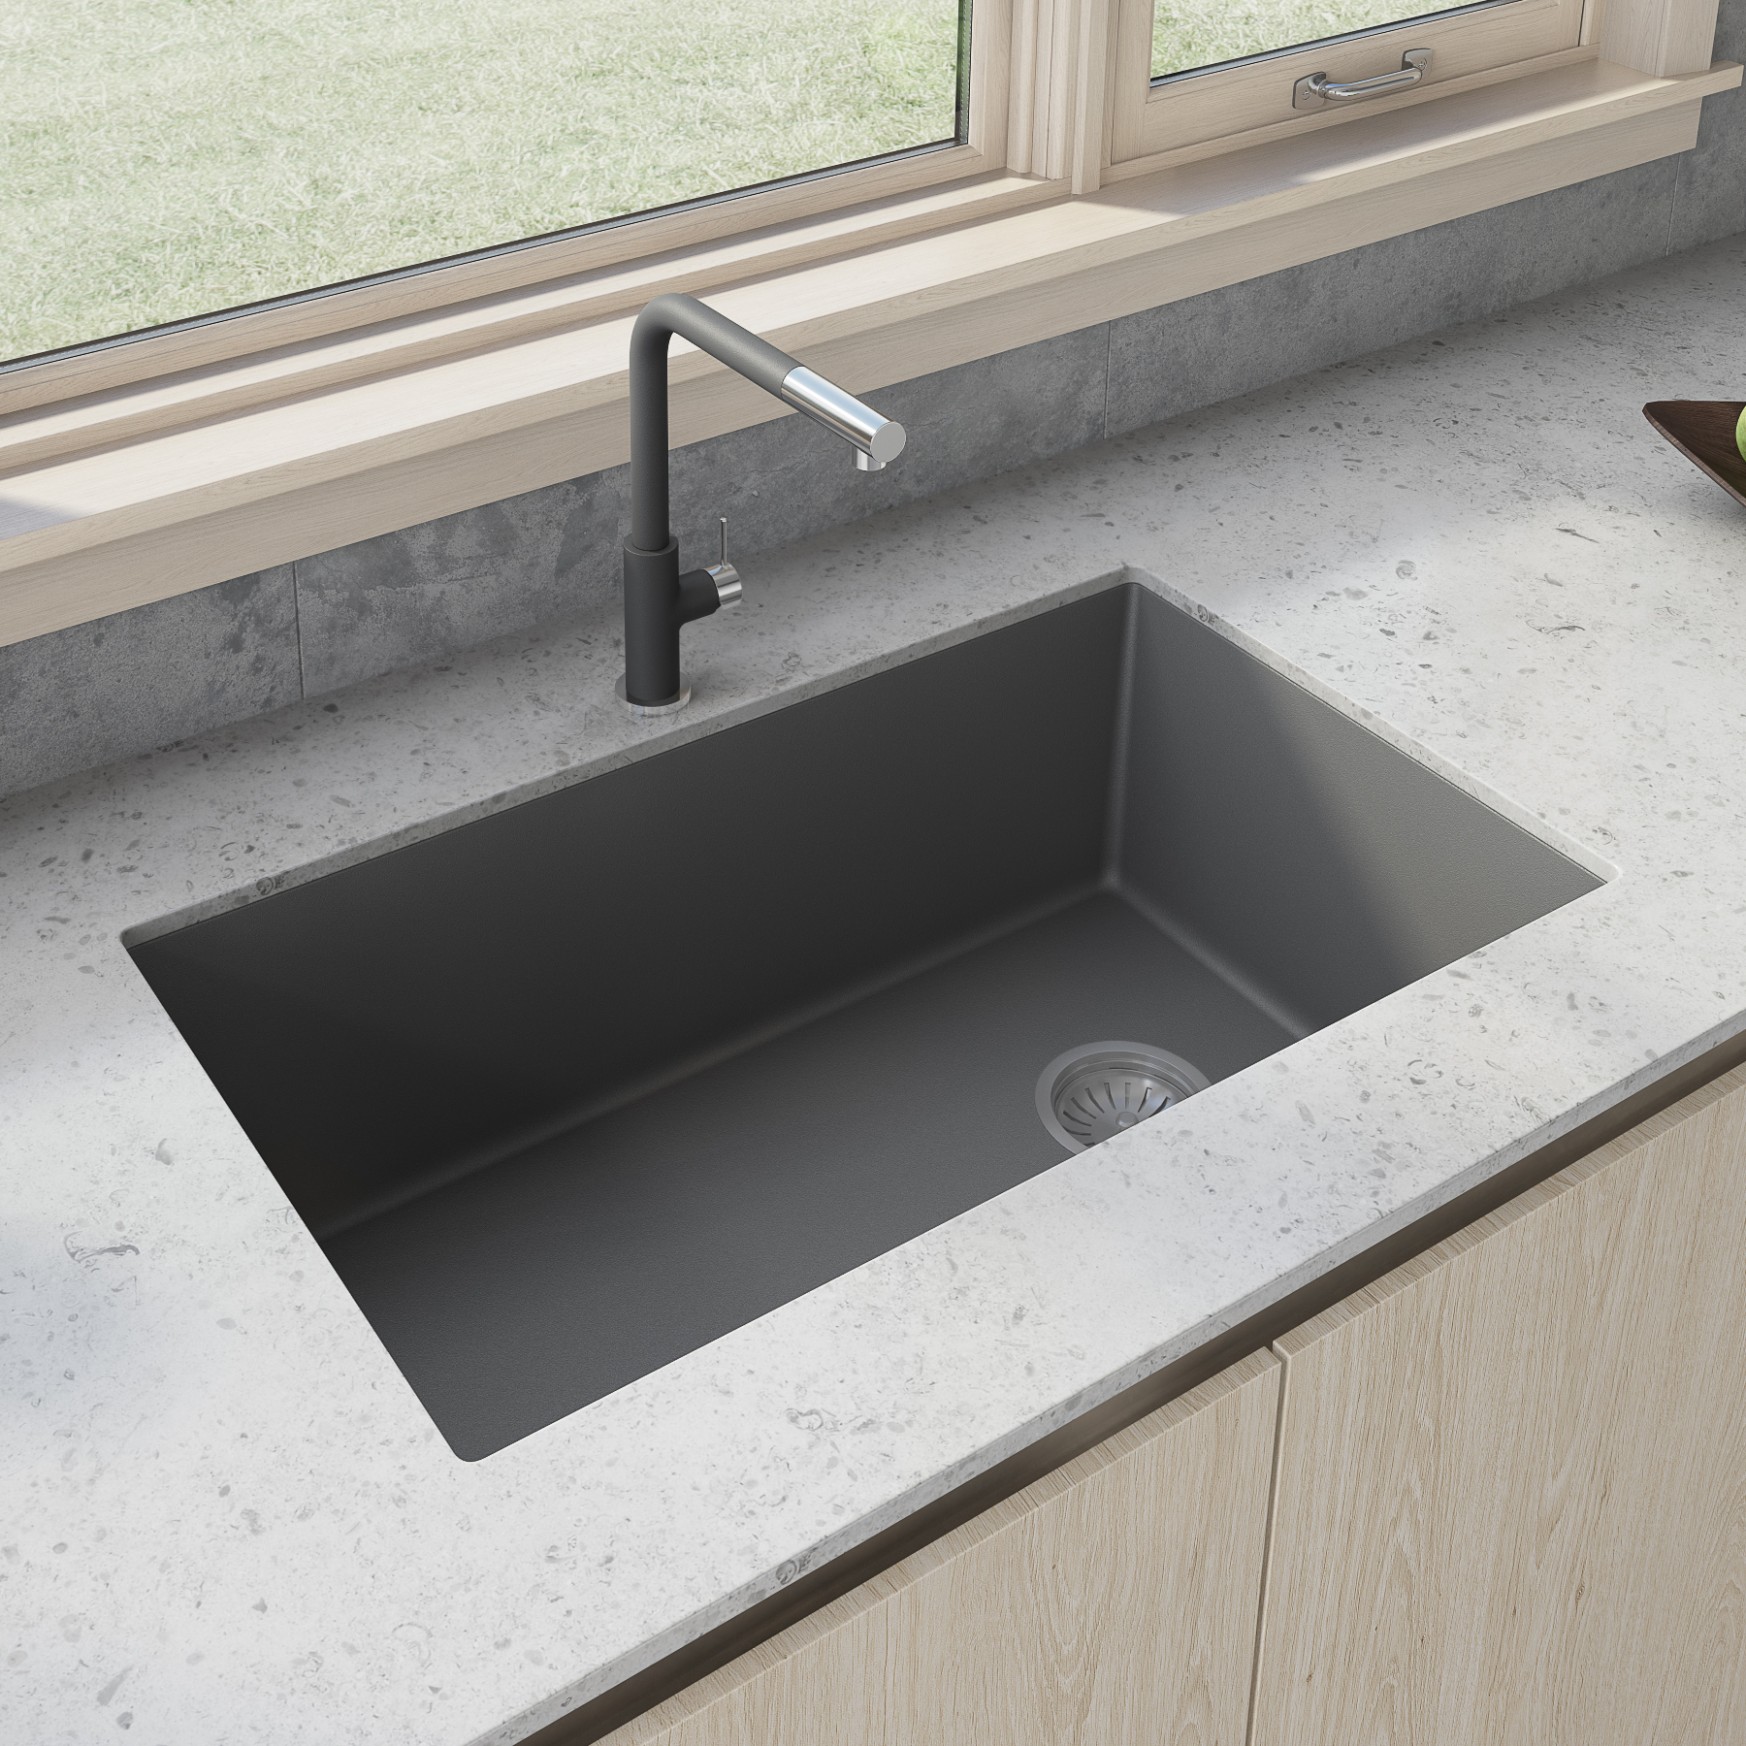 5 x 5 inch epiGranite Undermount Granite Composite Single Bowl  - grey kitchen sink